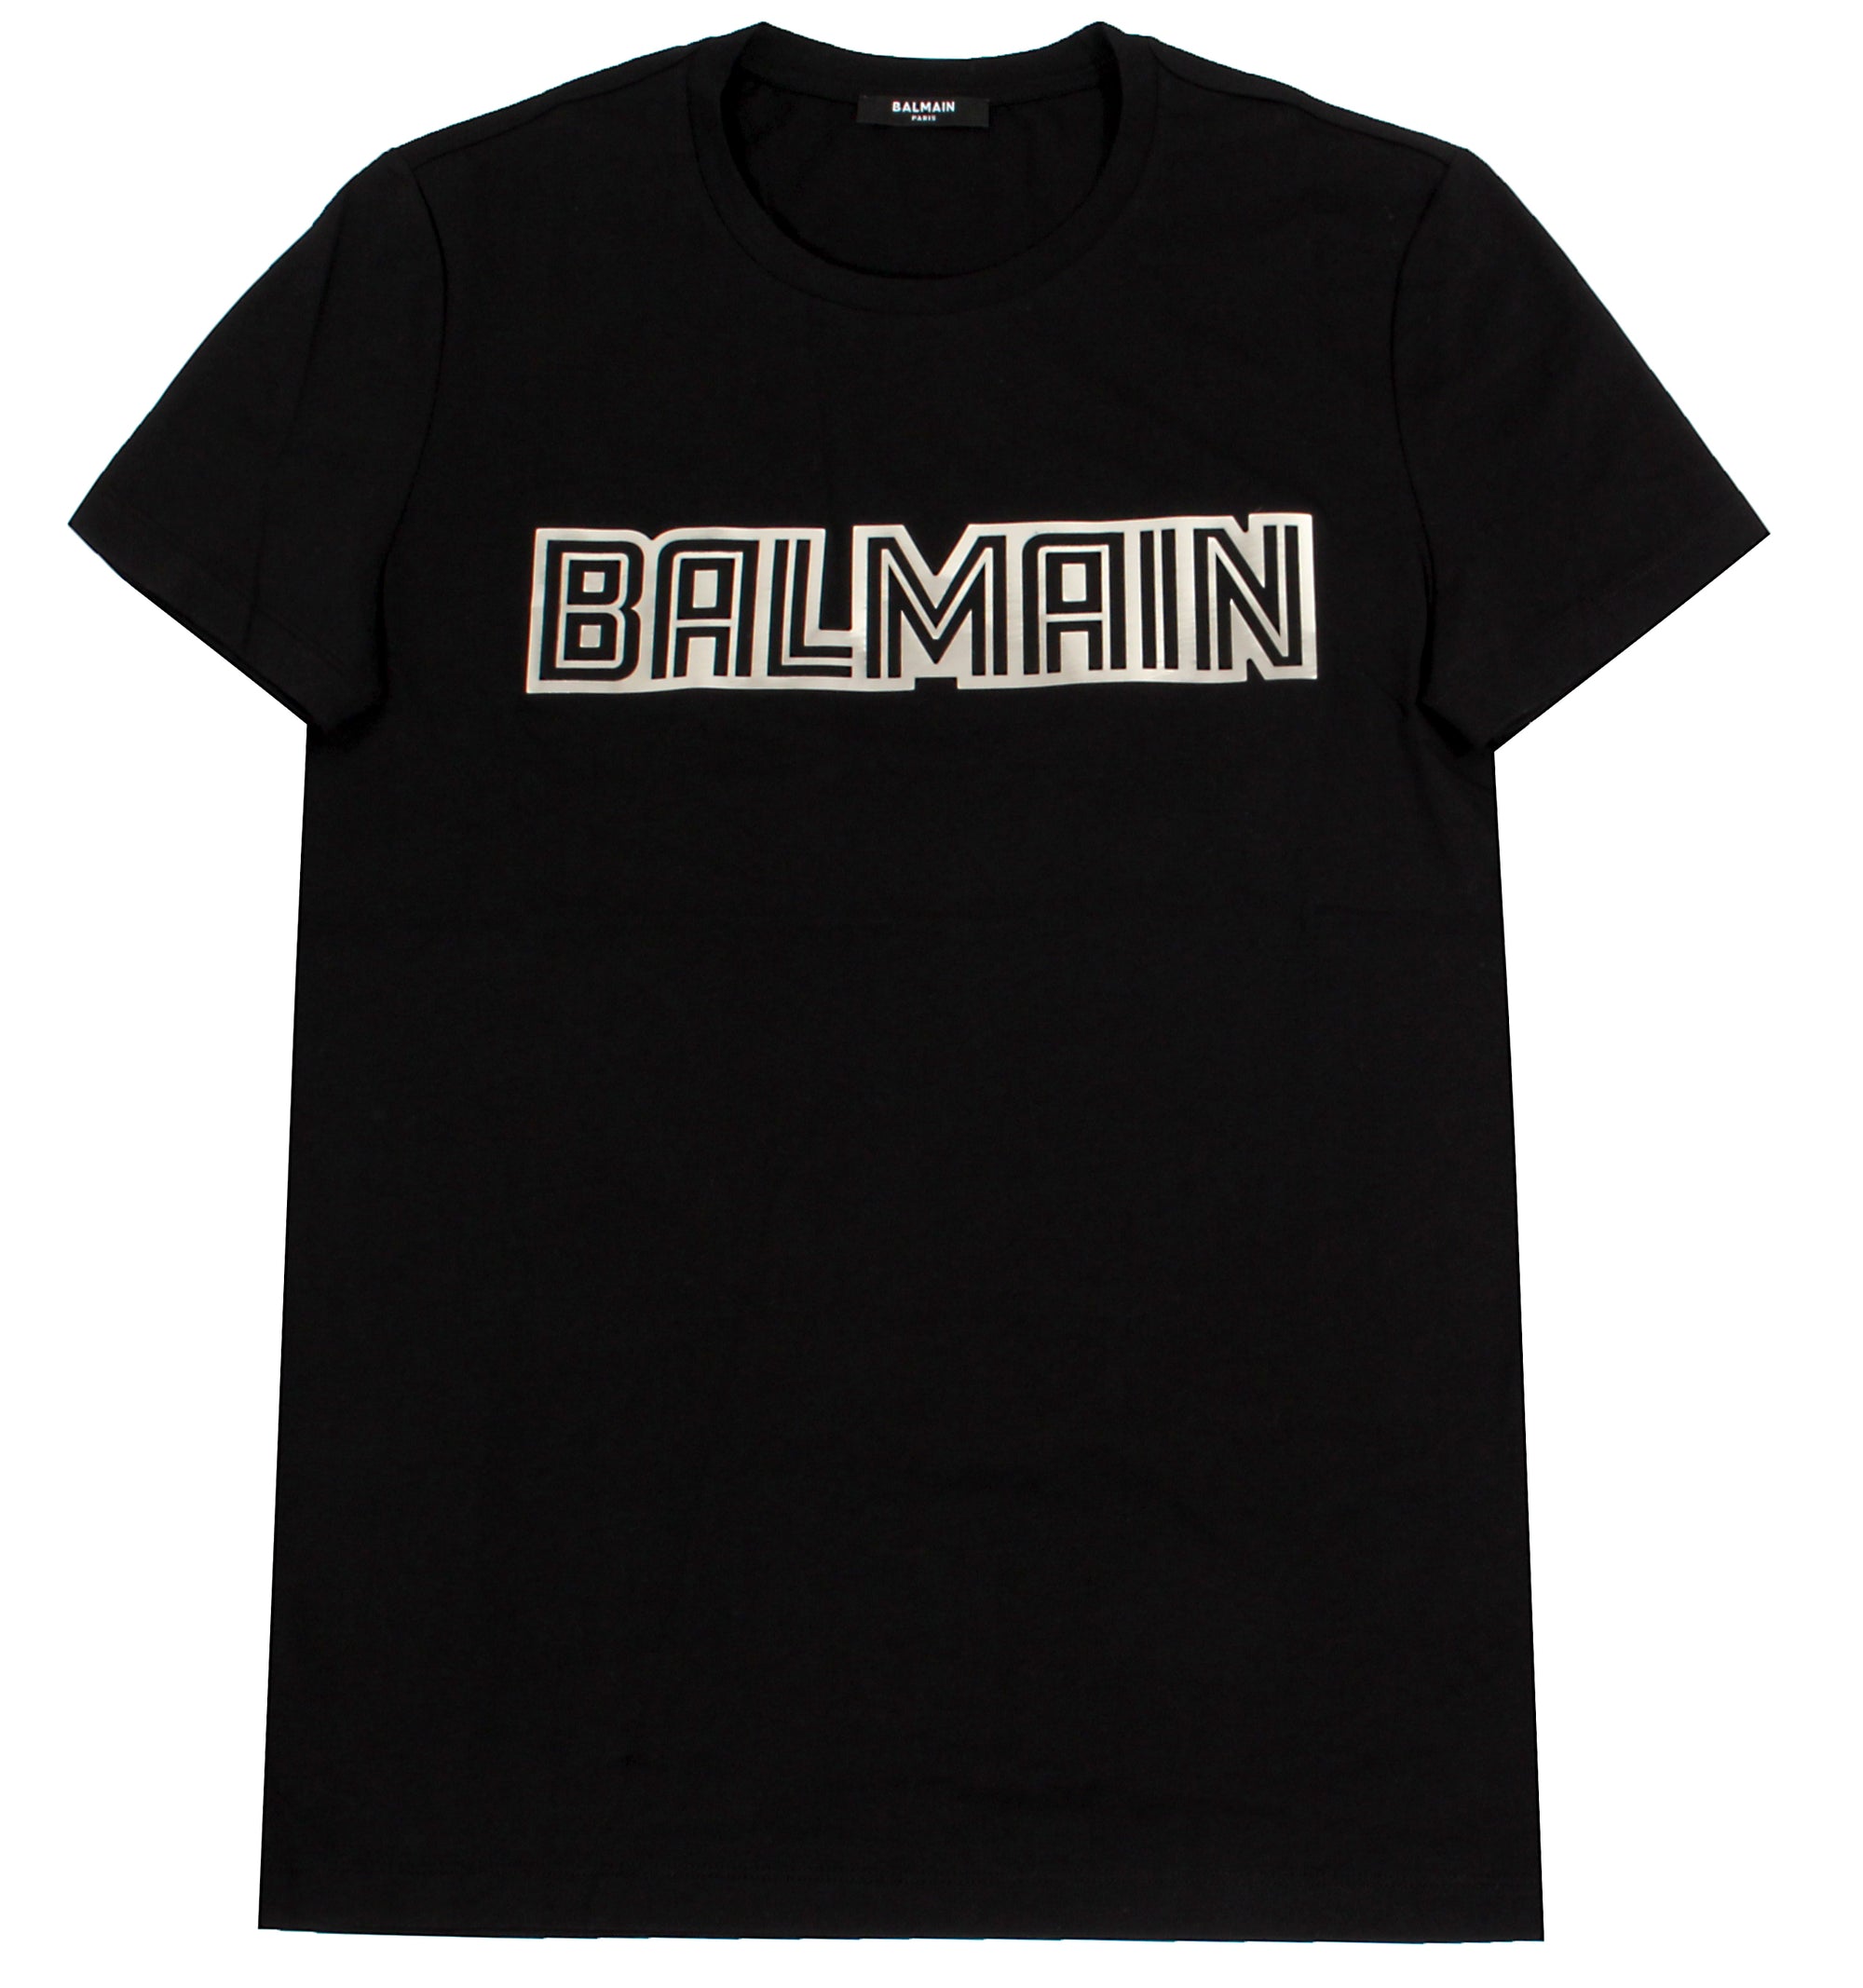 Metallic Balmain Embossed T-Shirt - Black & Silver